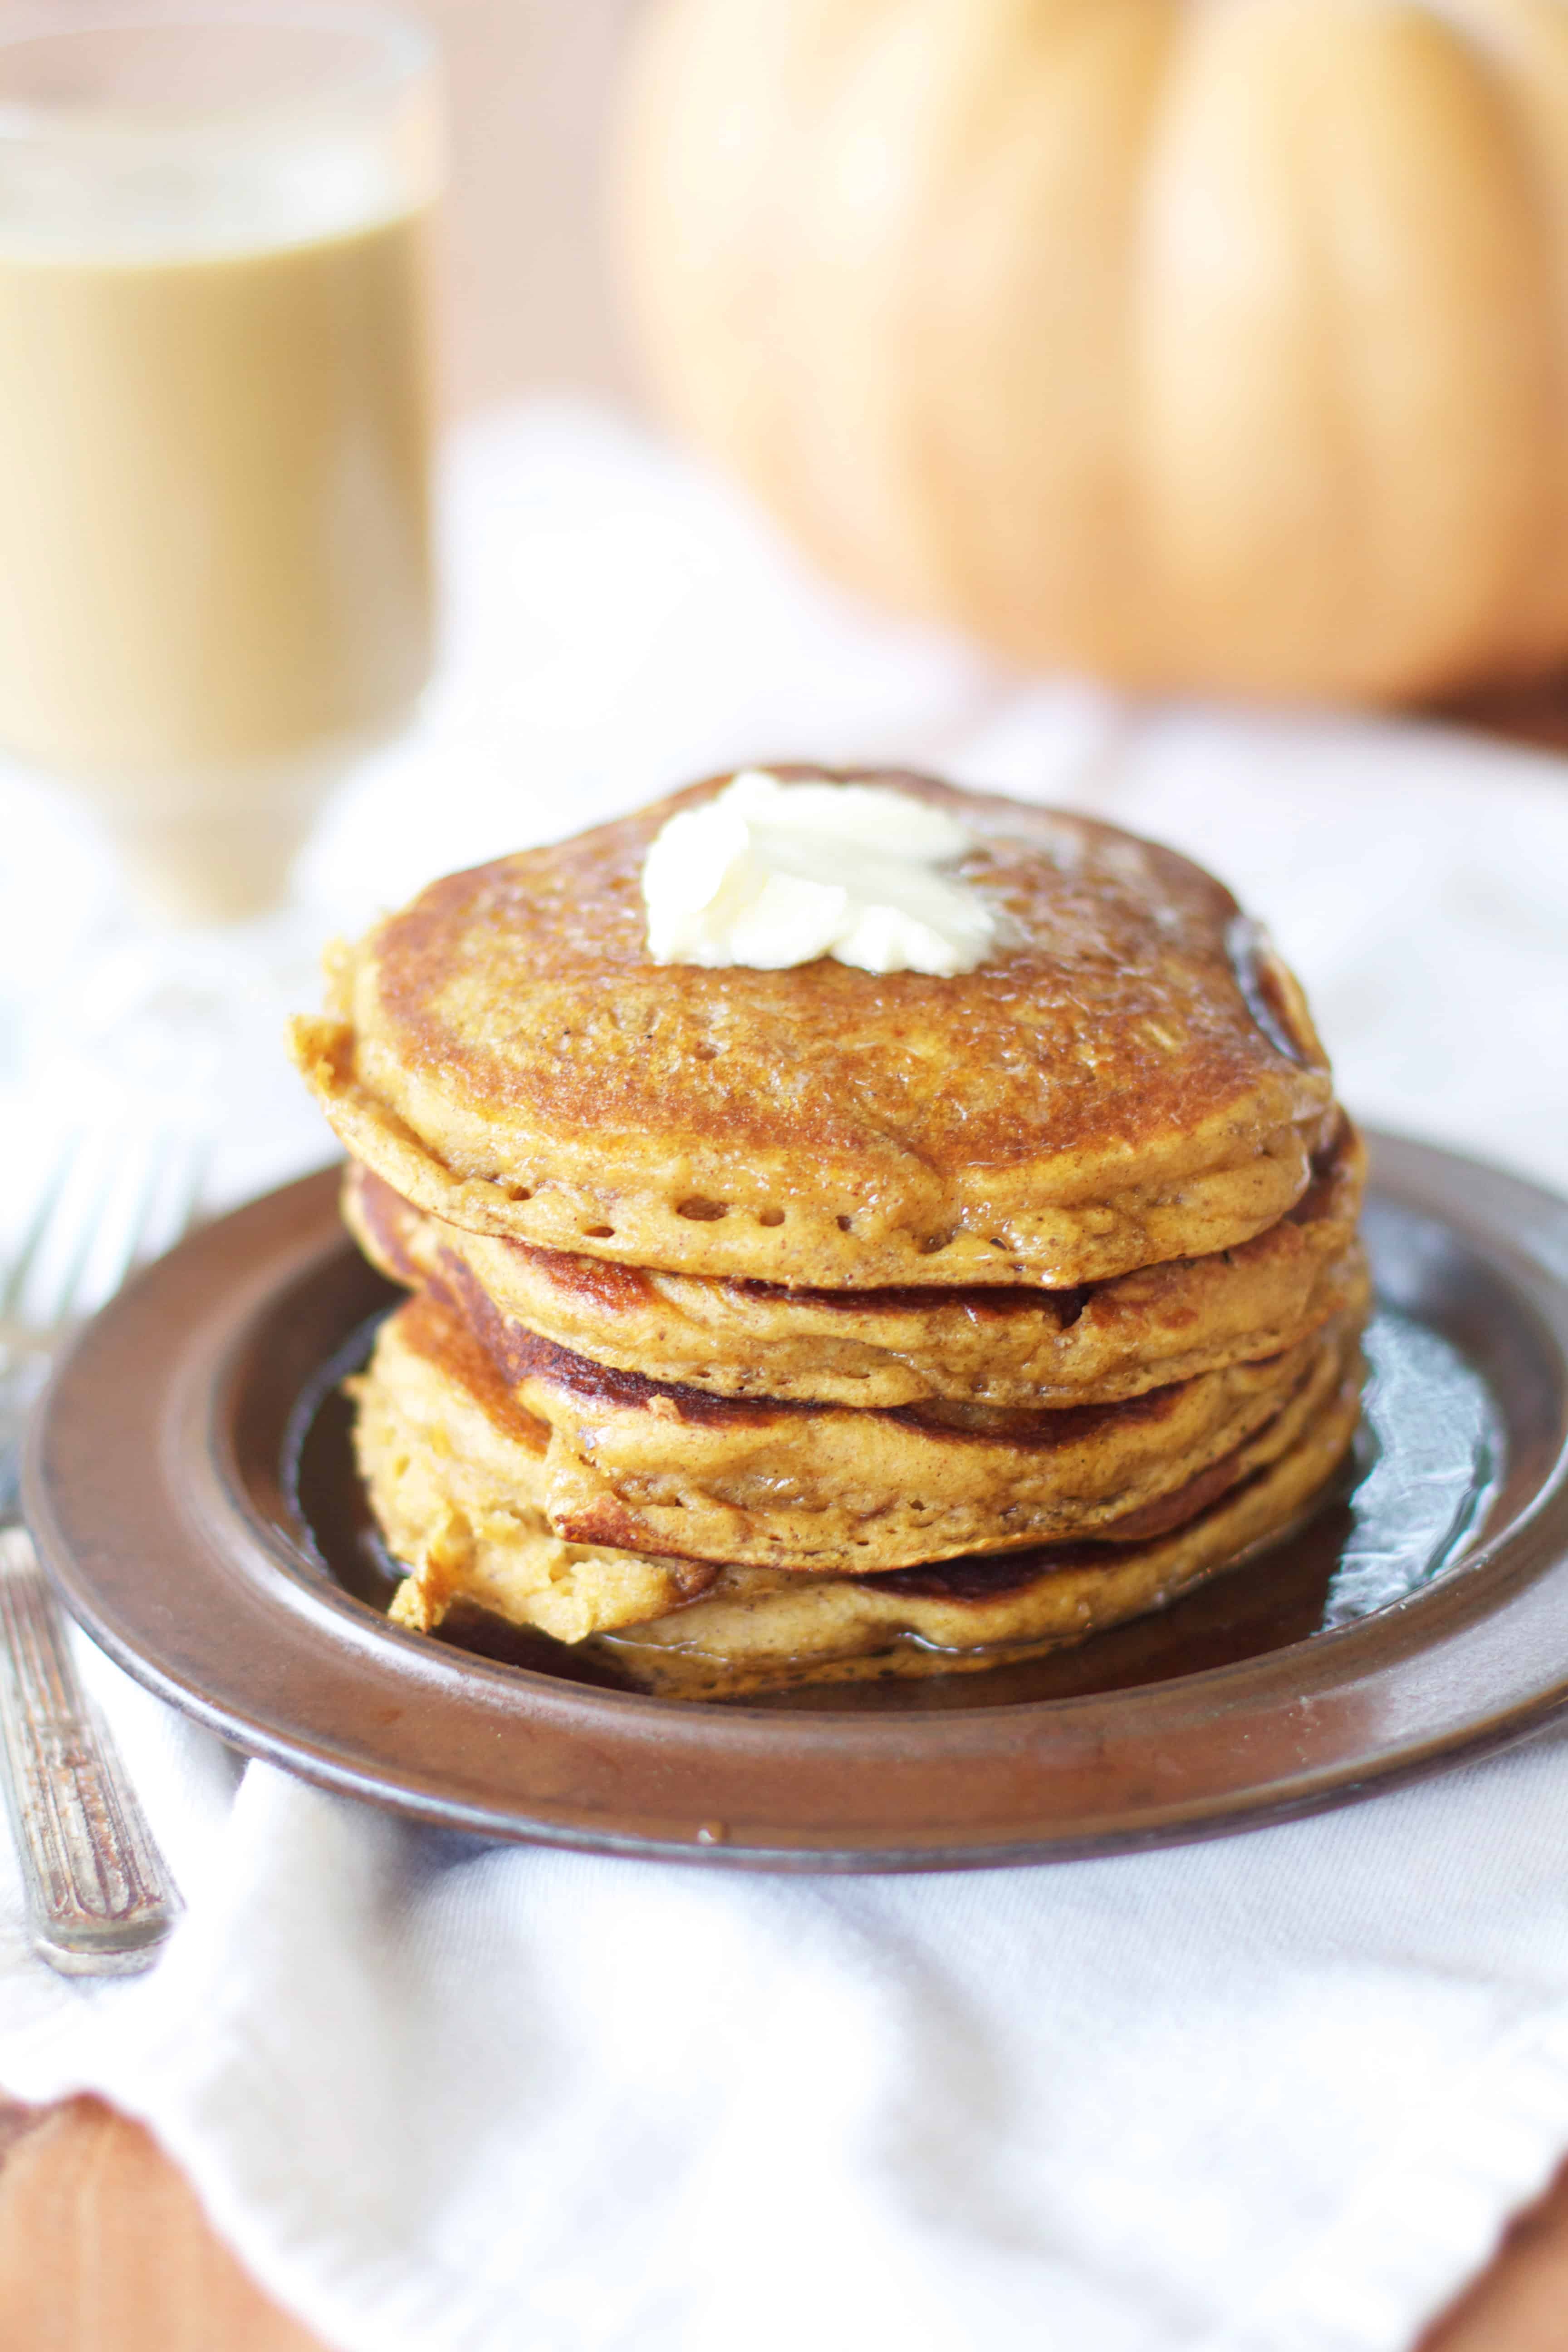 You Can Get an Autumn Leaves Pancake Pan That Will Make a Seasonal